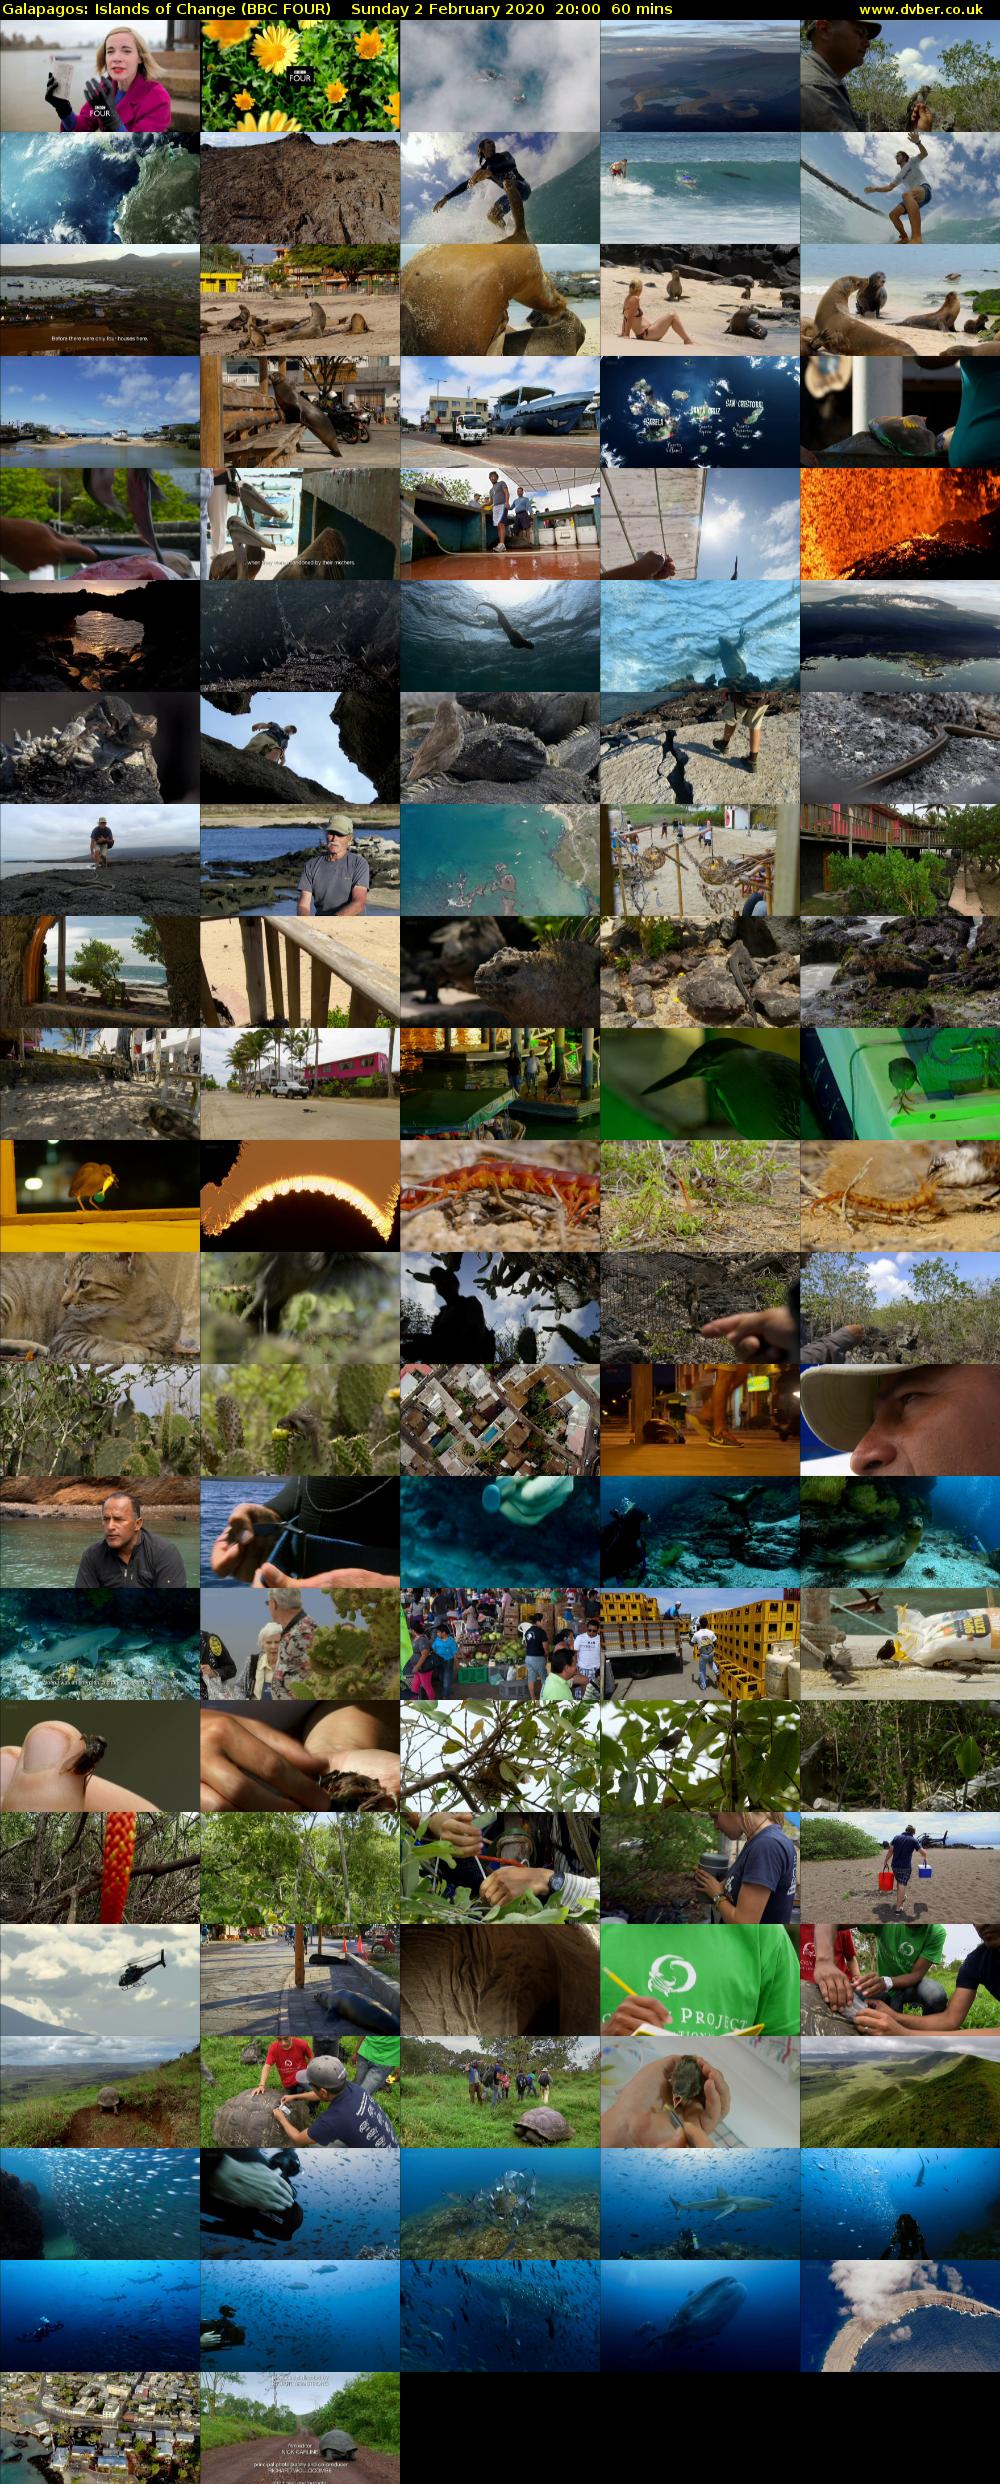 Galapagos: Islands of Change (BBC FOUR) Sunday 2 February 2020 20:00 - 21:00